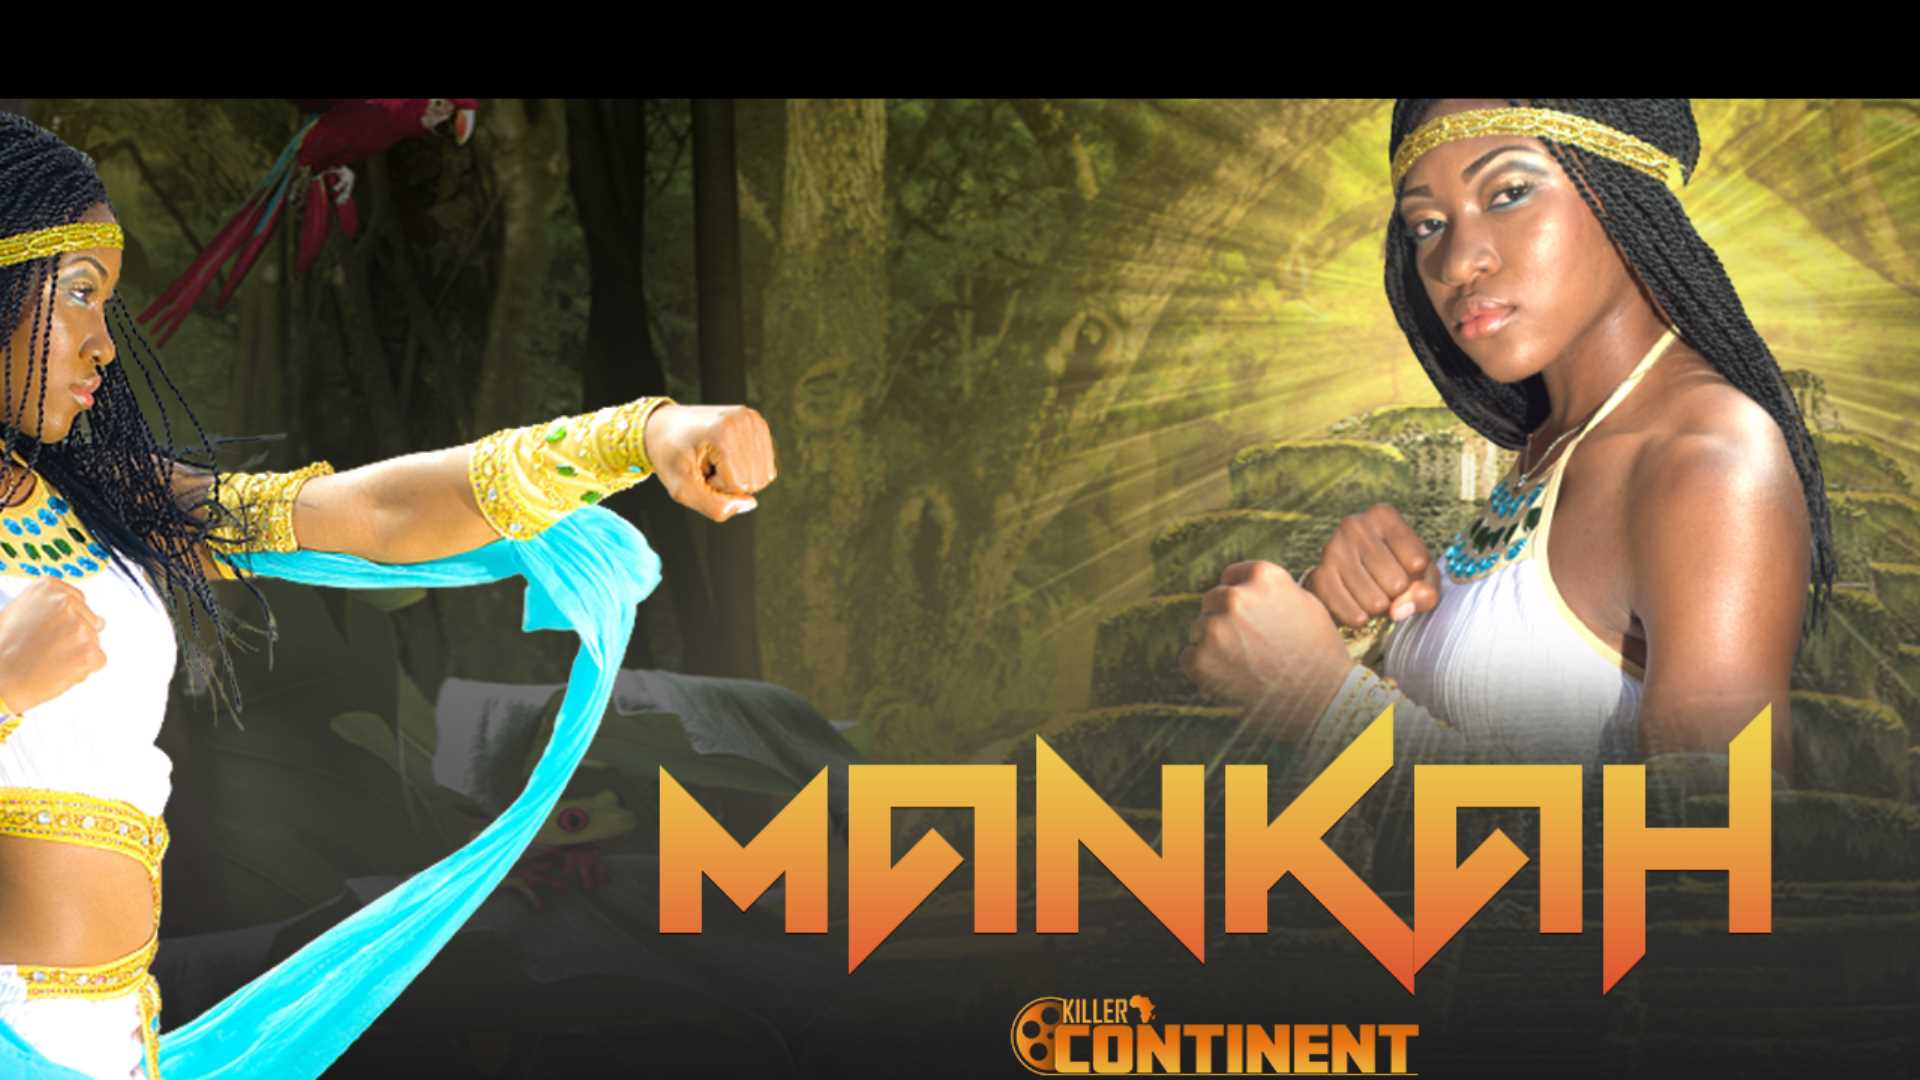 KillerContinent | Killer Continent | MANKAH